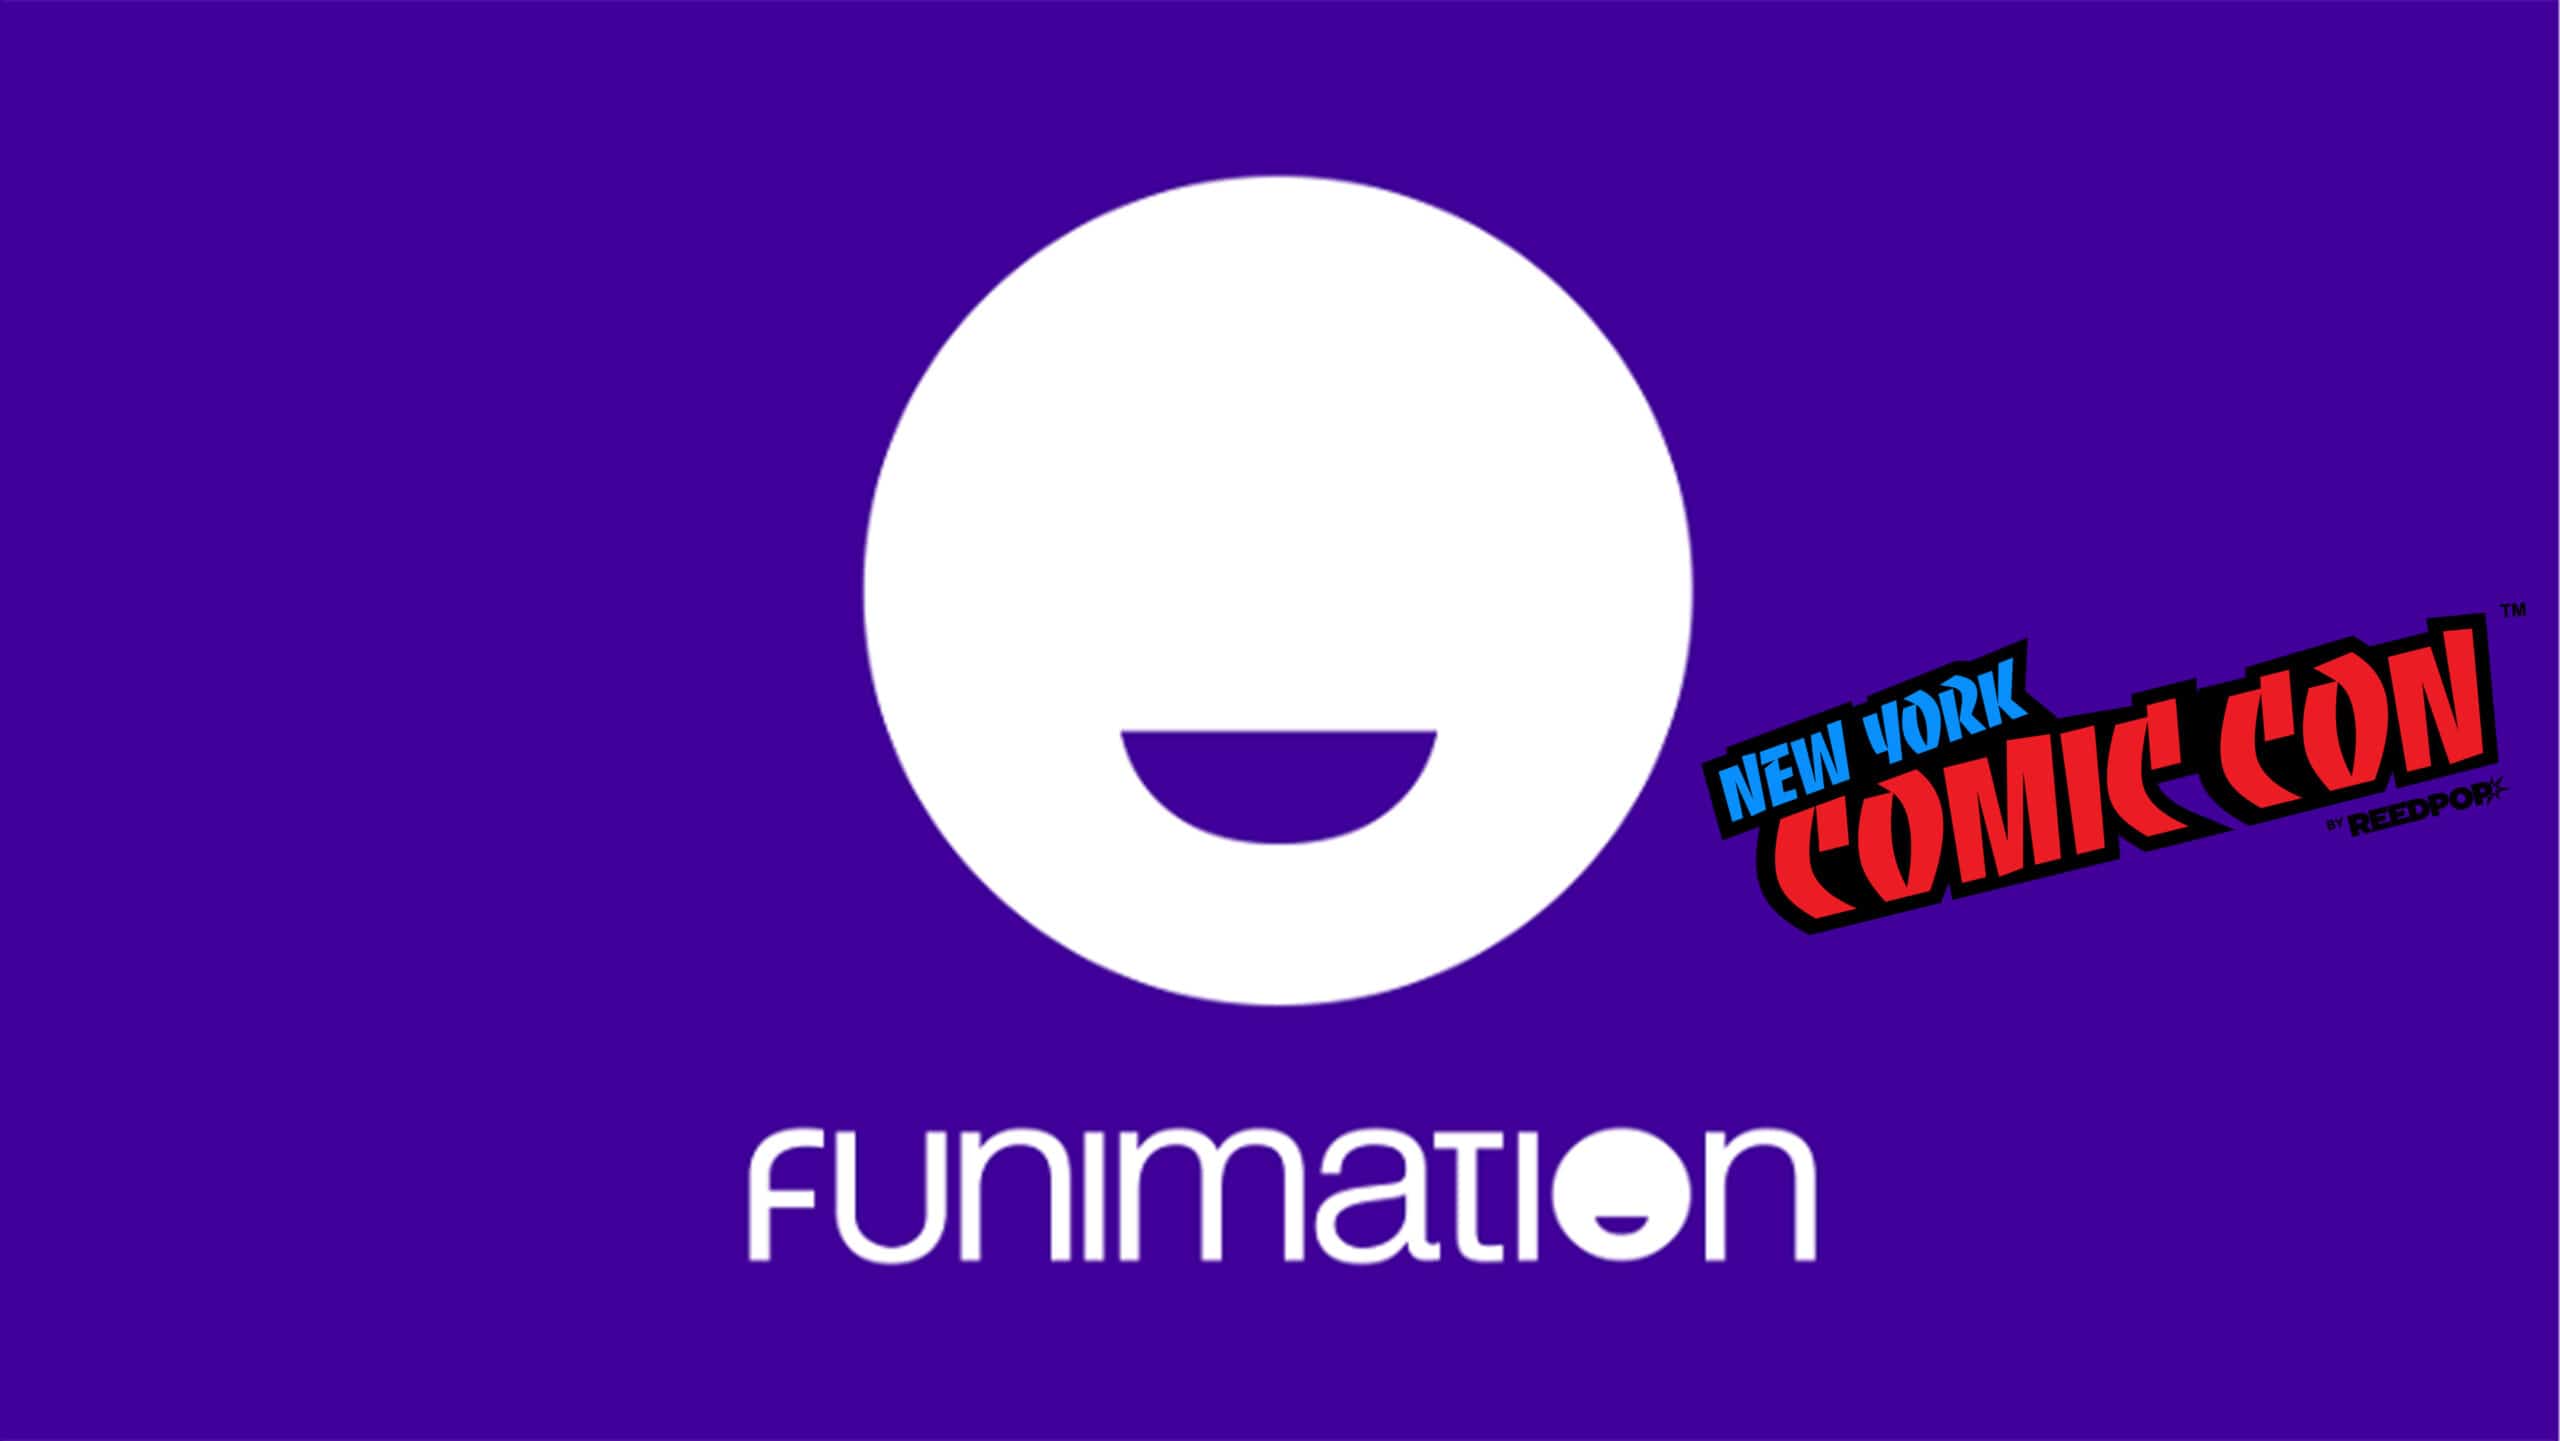 Funimation, New York Comic Con, GamersRD